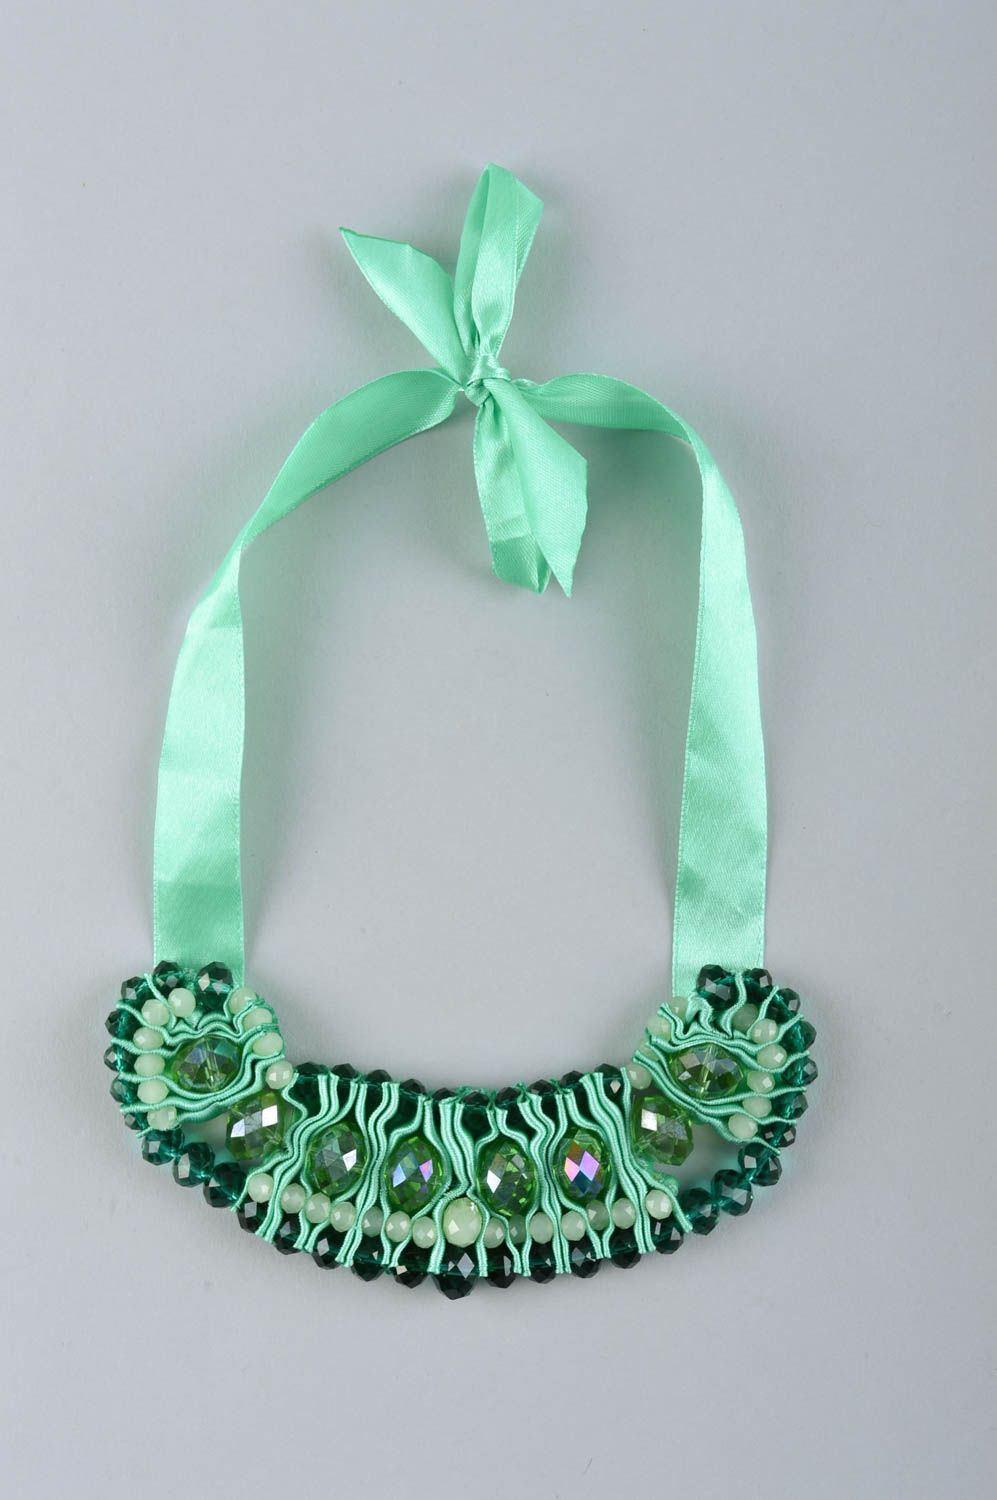 Handmade necklace ribbon necklace unusual jewelry designer accessory gift ideas photo 2